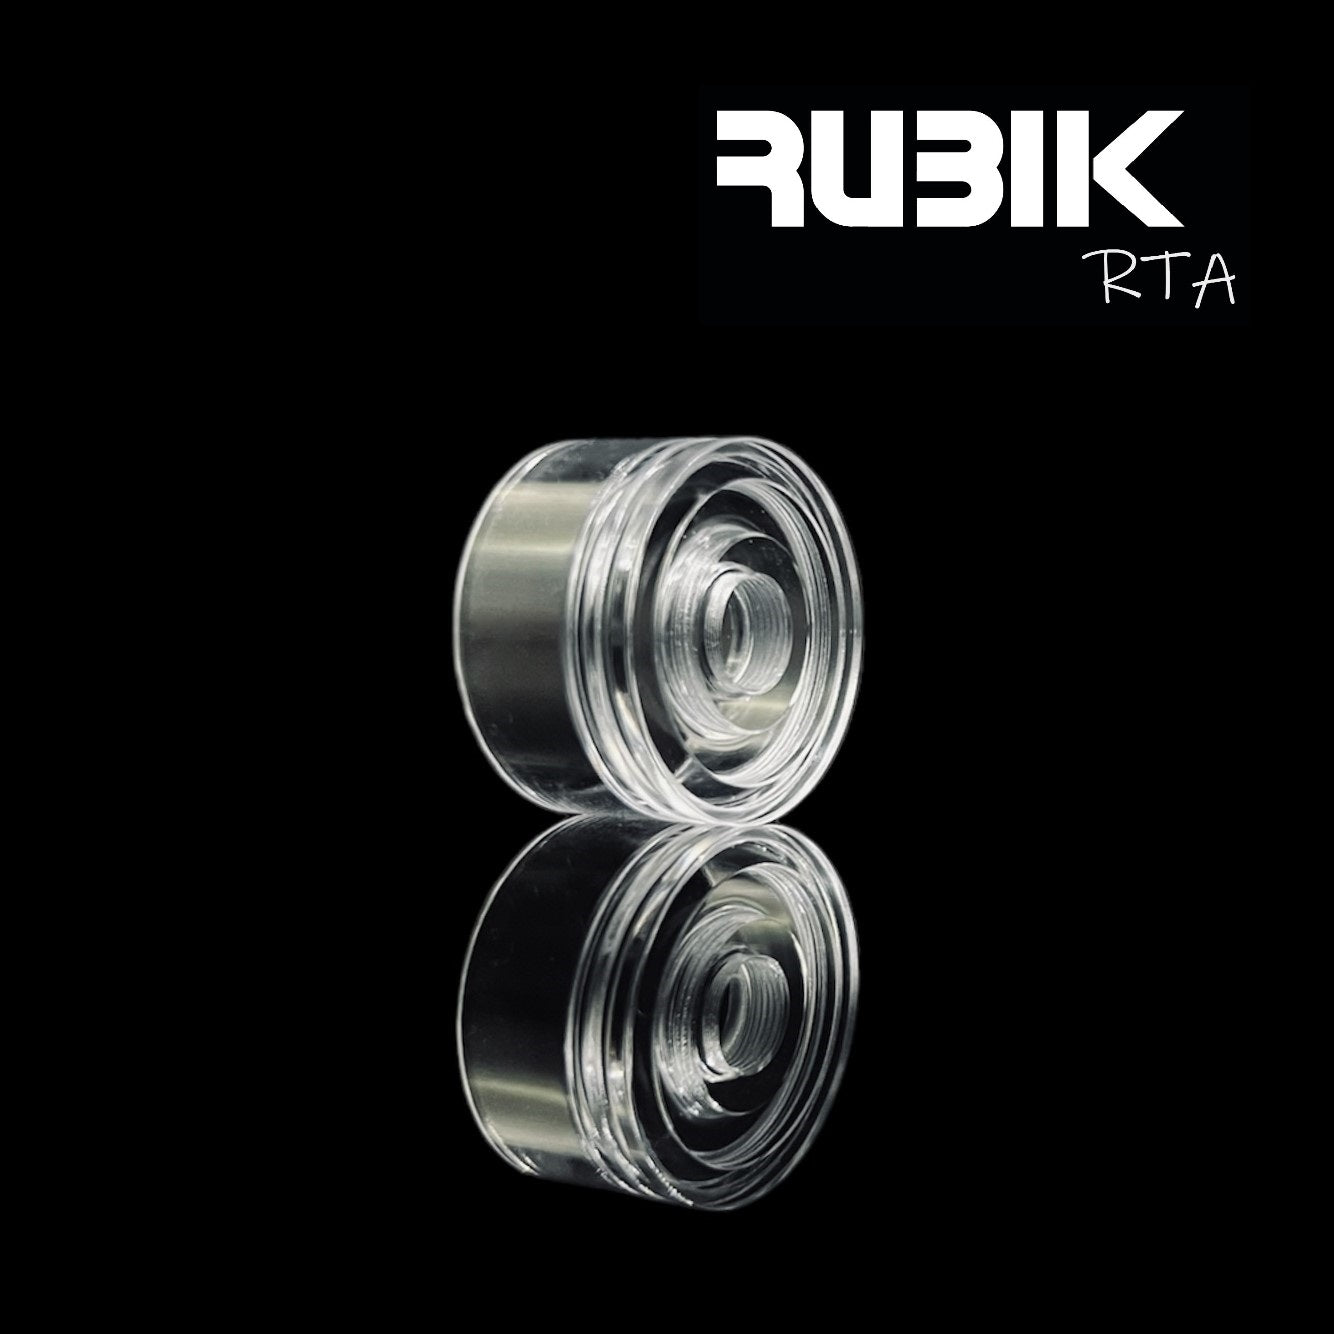 Rubik RTA - New Cup Tank – The Vaping Gentlemen Club